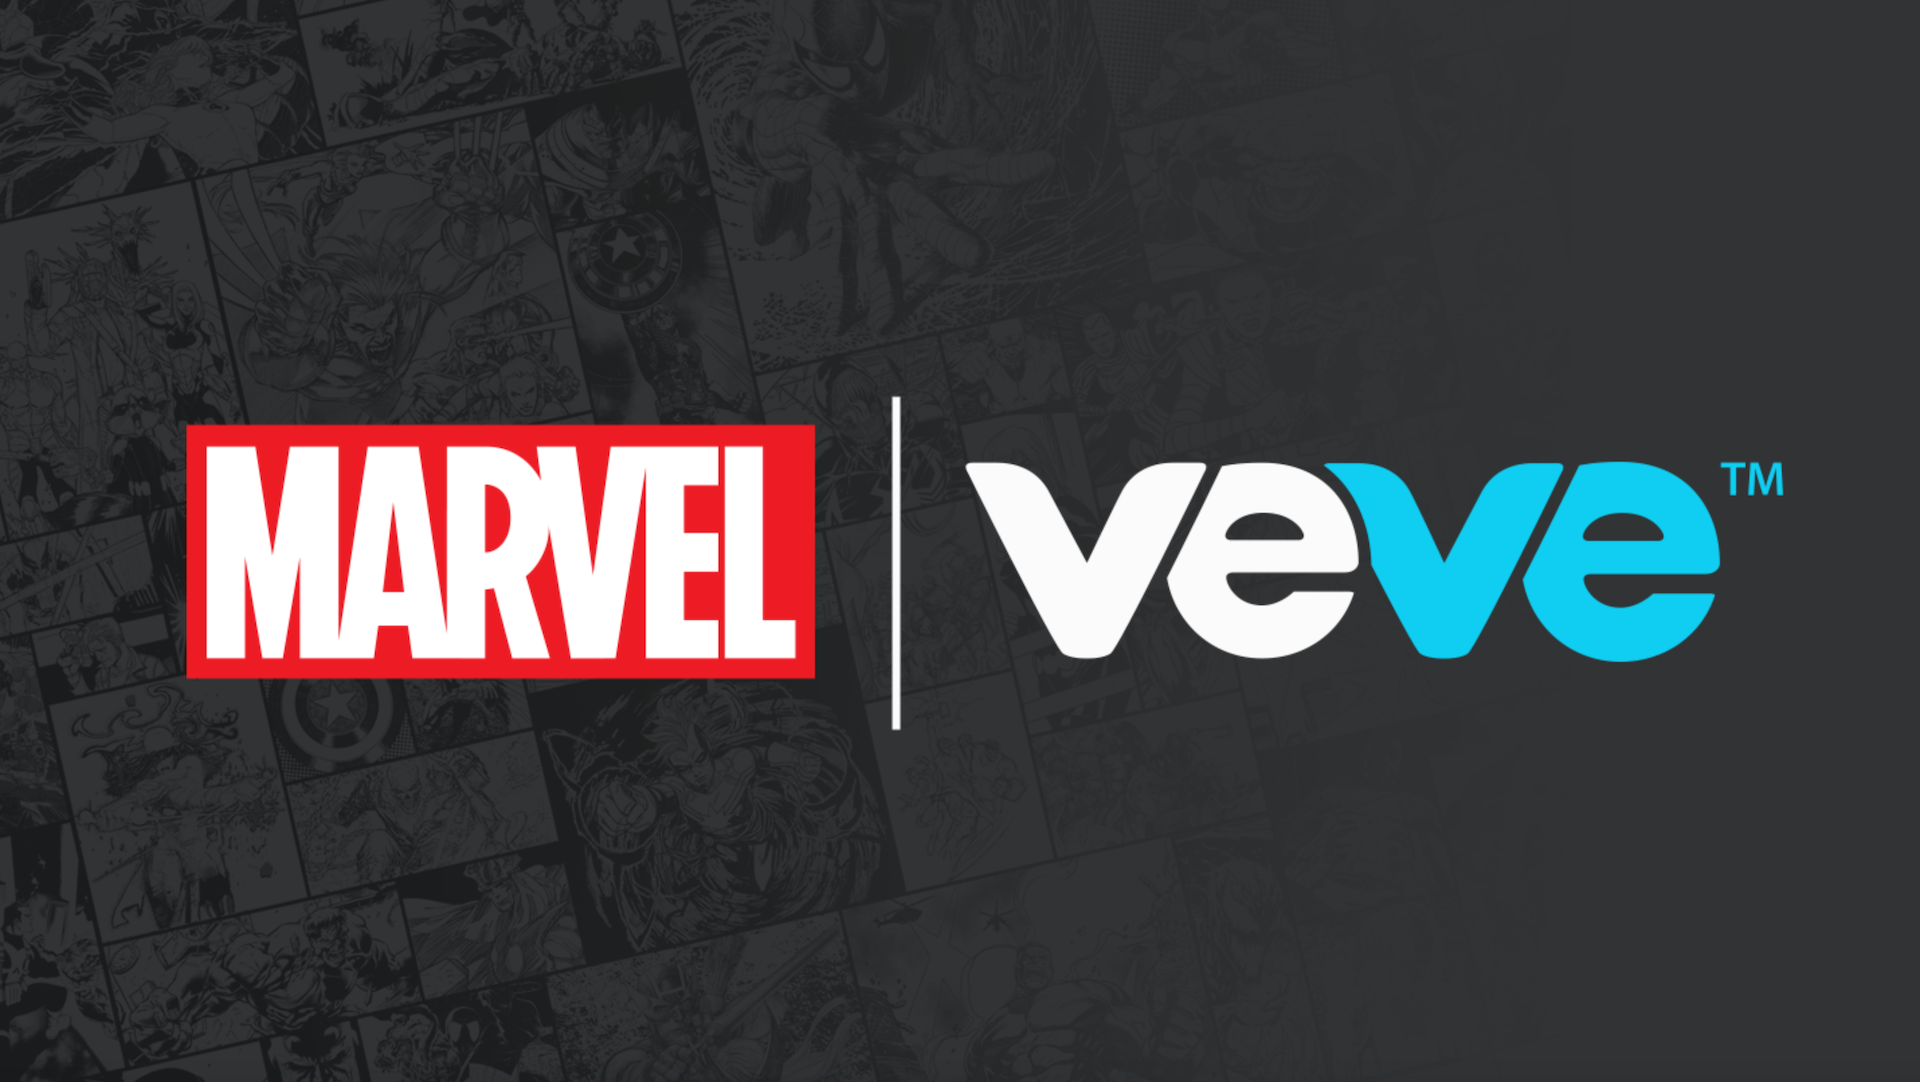 Marvel offer NFT collecting via Veve Digital Collectibles App